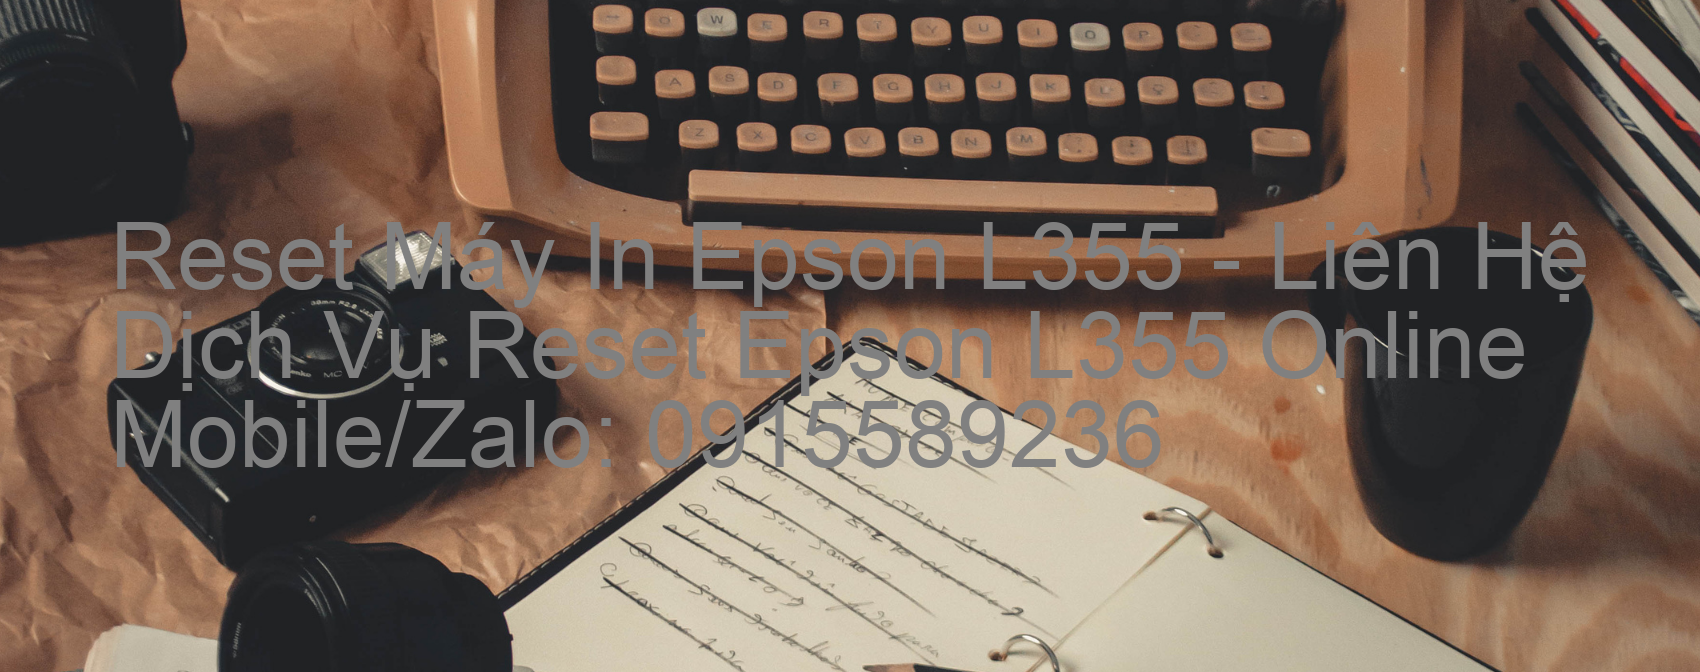 Reset Máy In Epson L355 Online